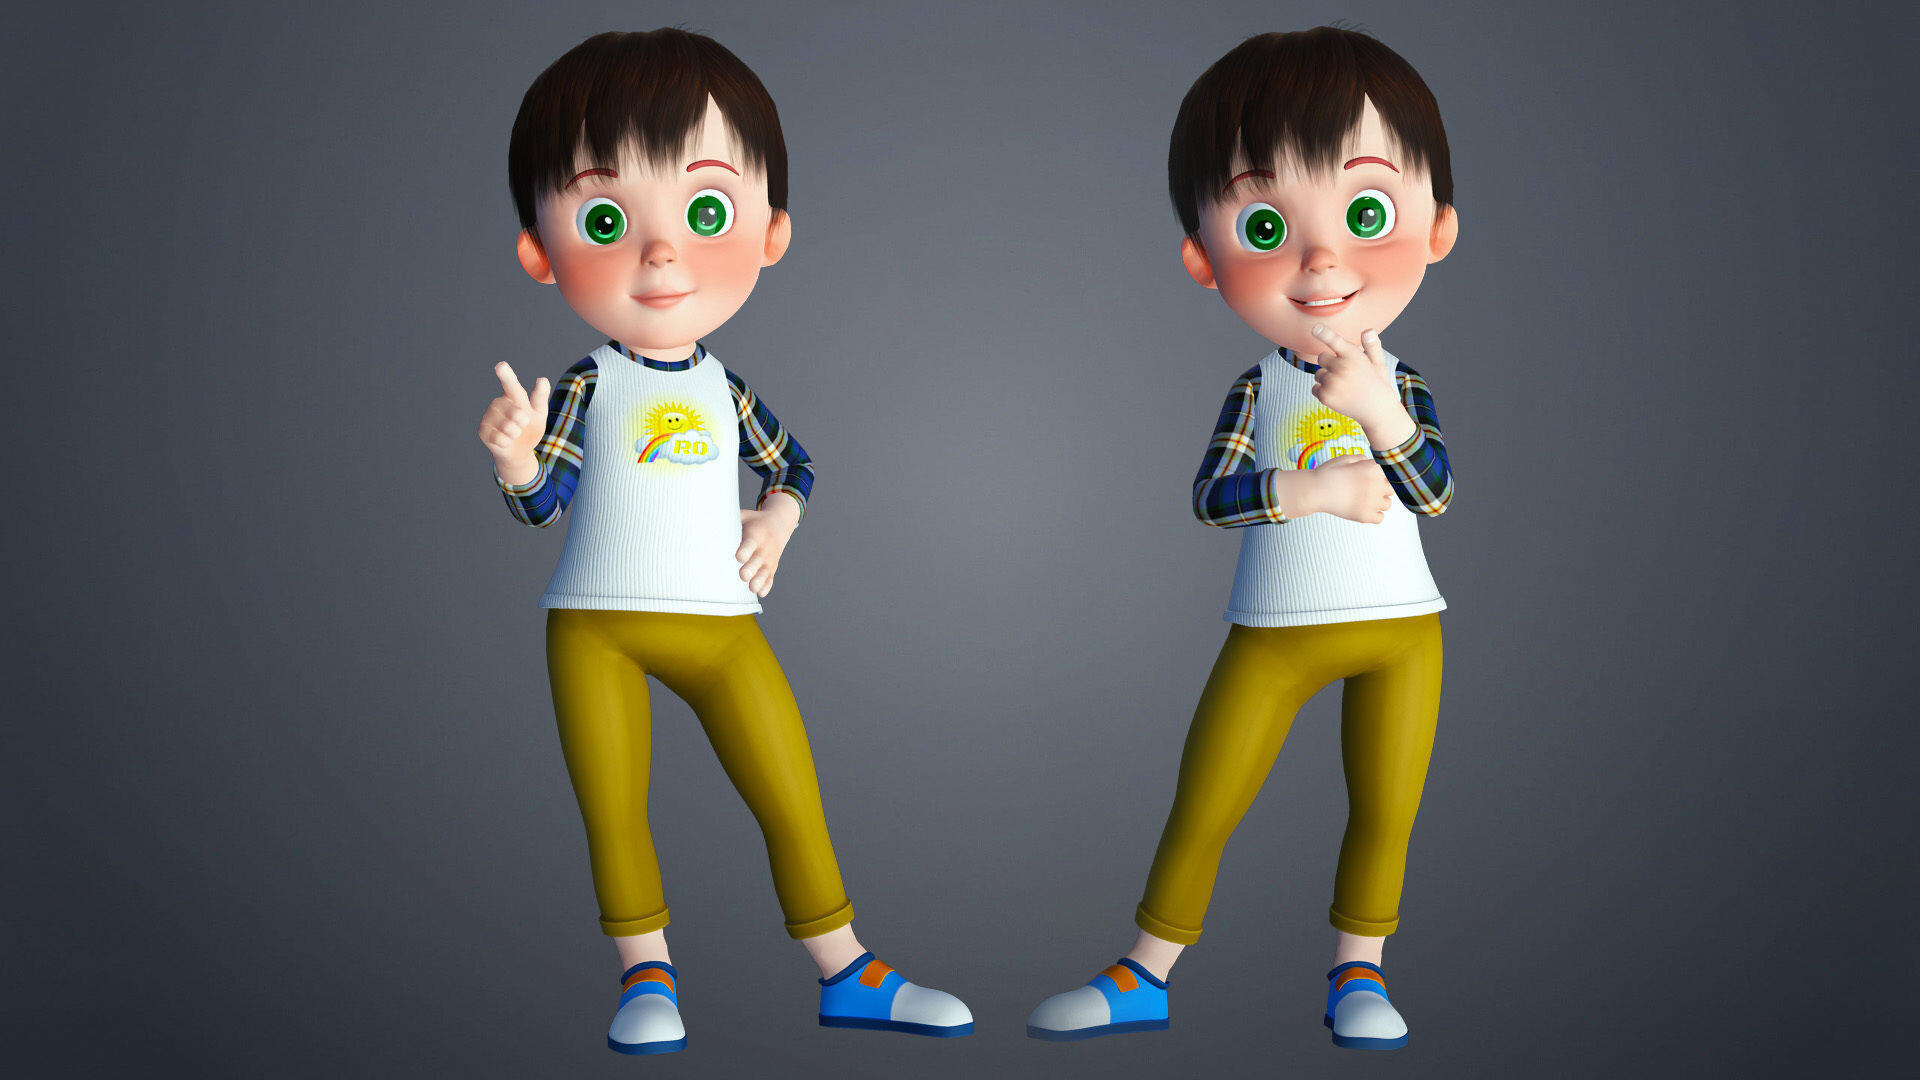 ArtStation - 3D Cartoon Baby Rigged Character Stylish Model